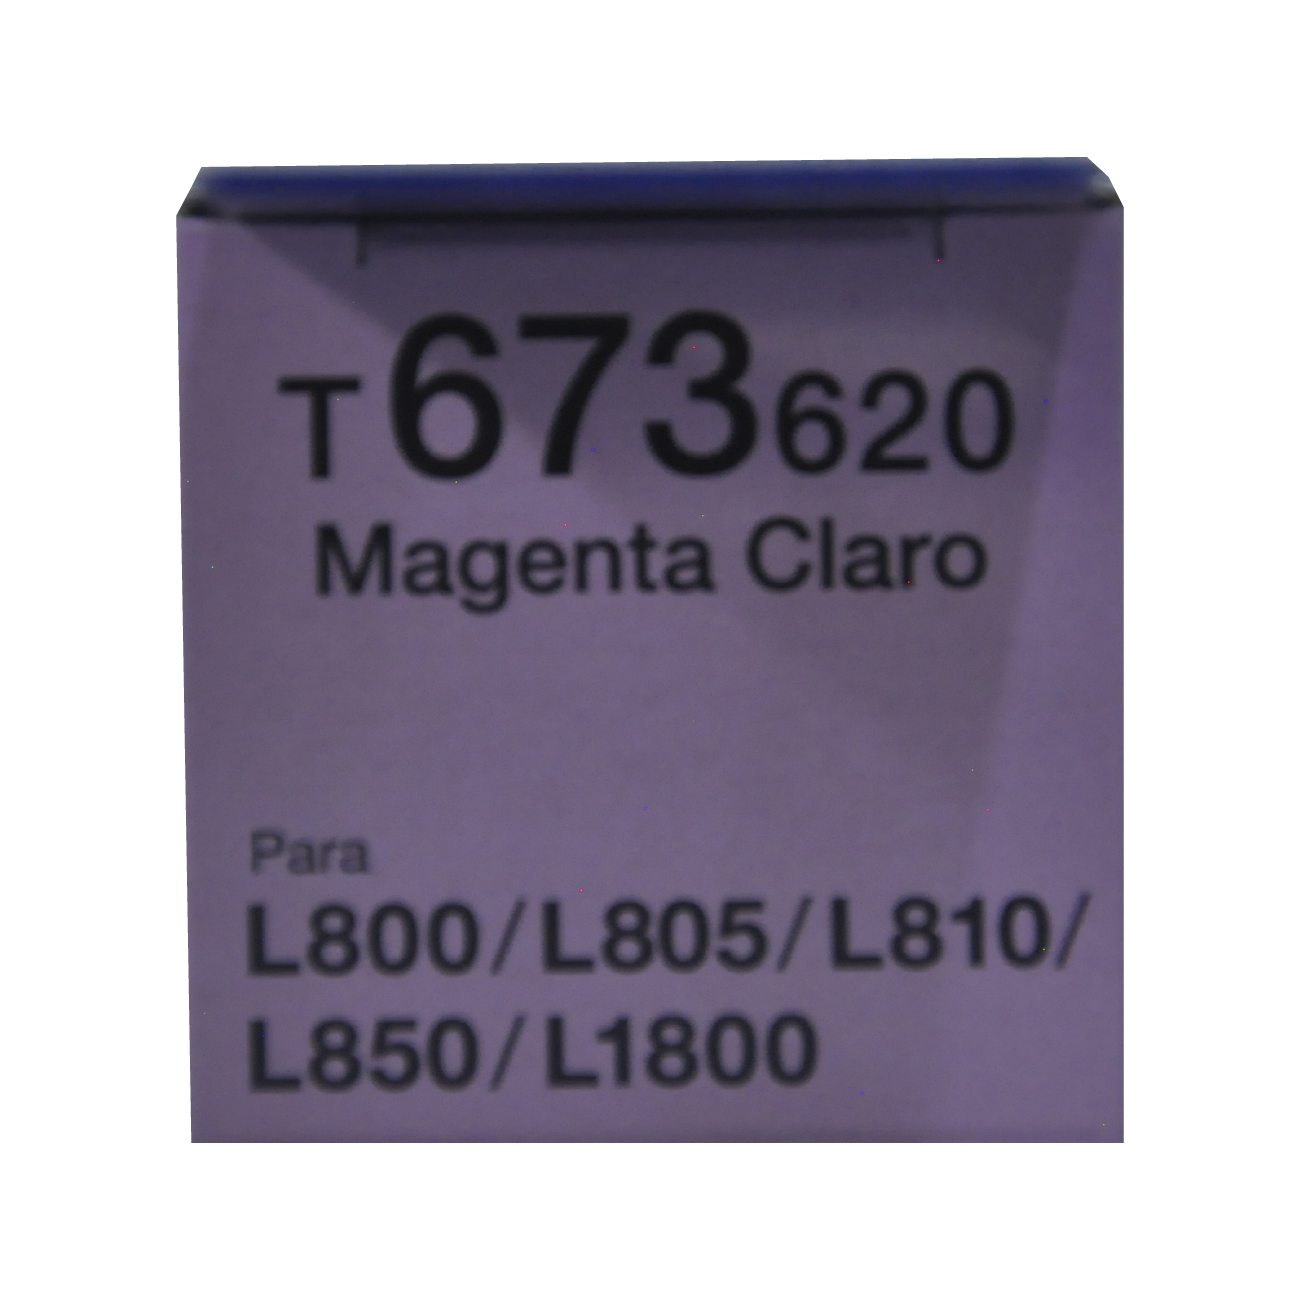 Botella de Tinta Epson T673 Magenta claro (T673620-AL)